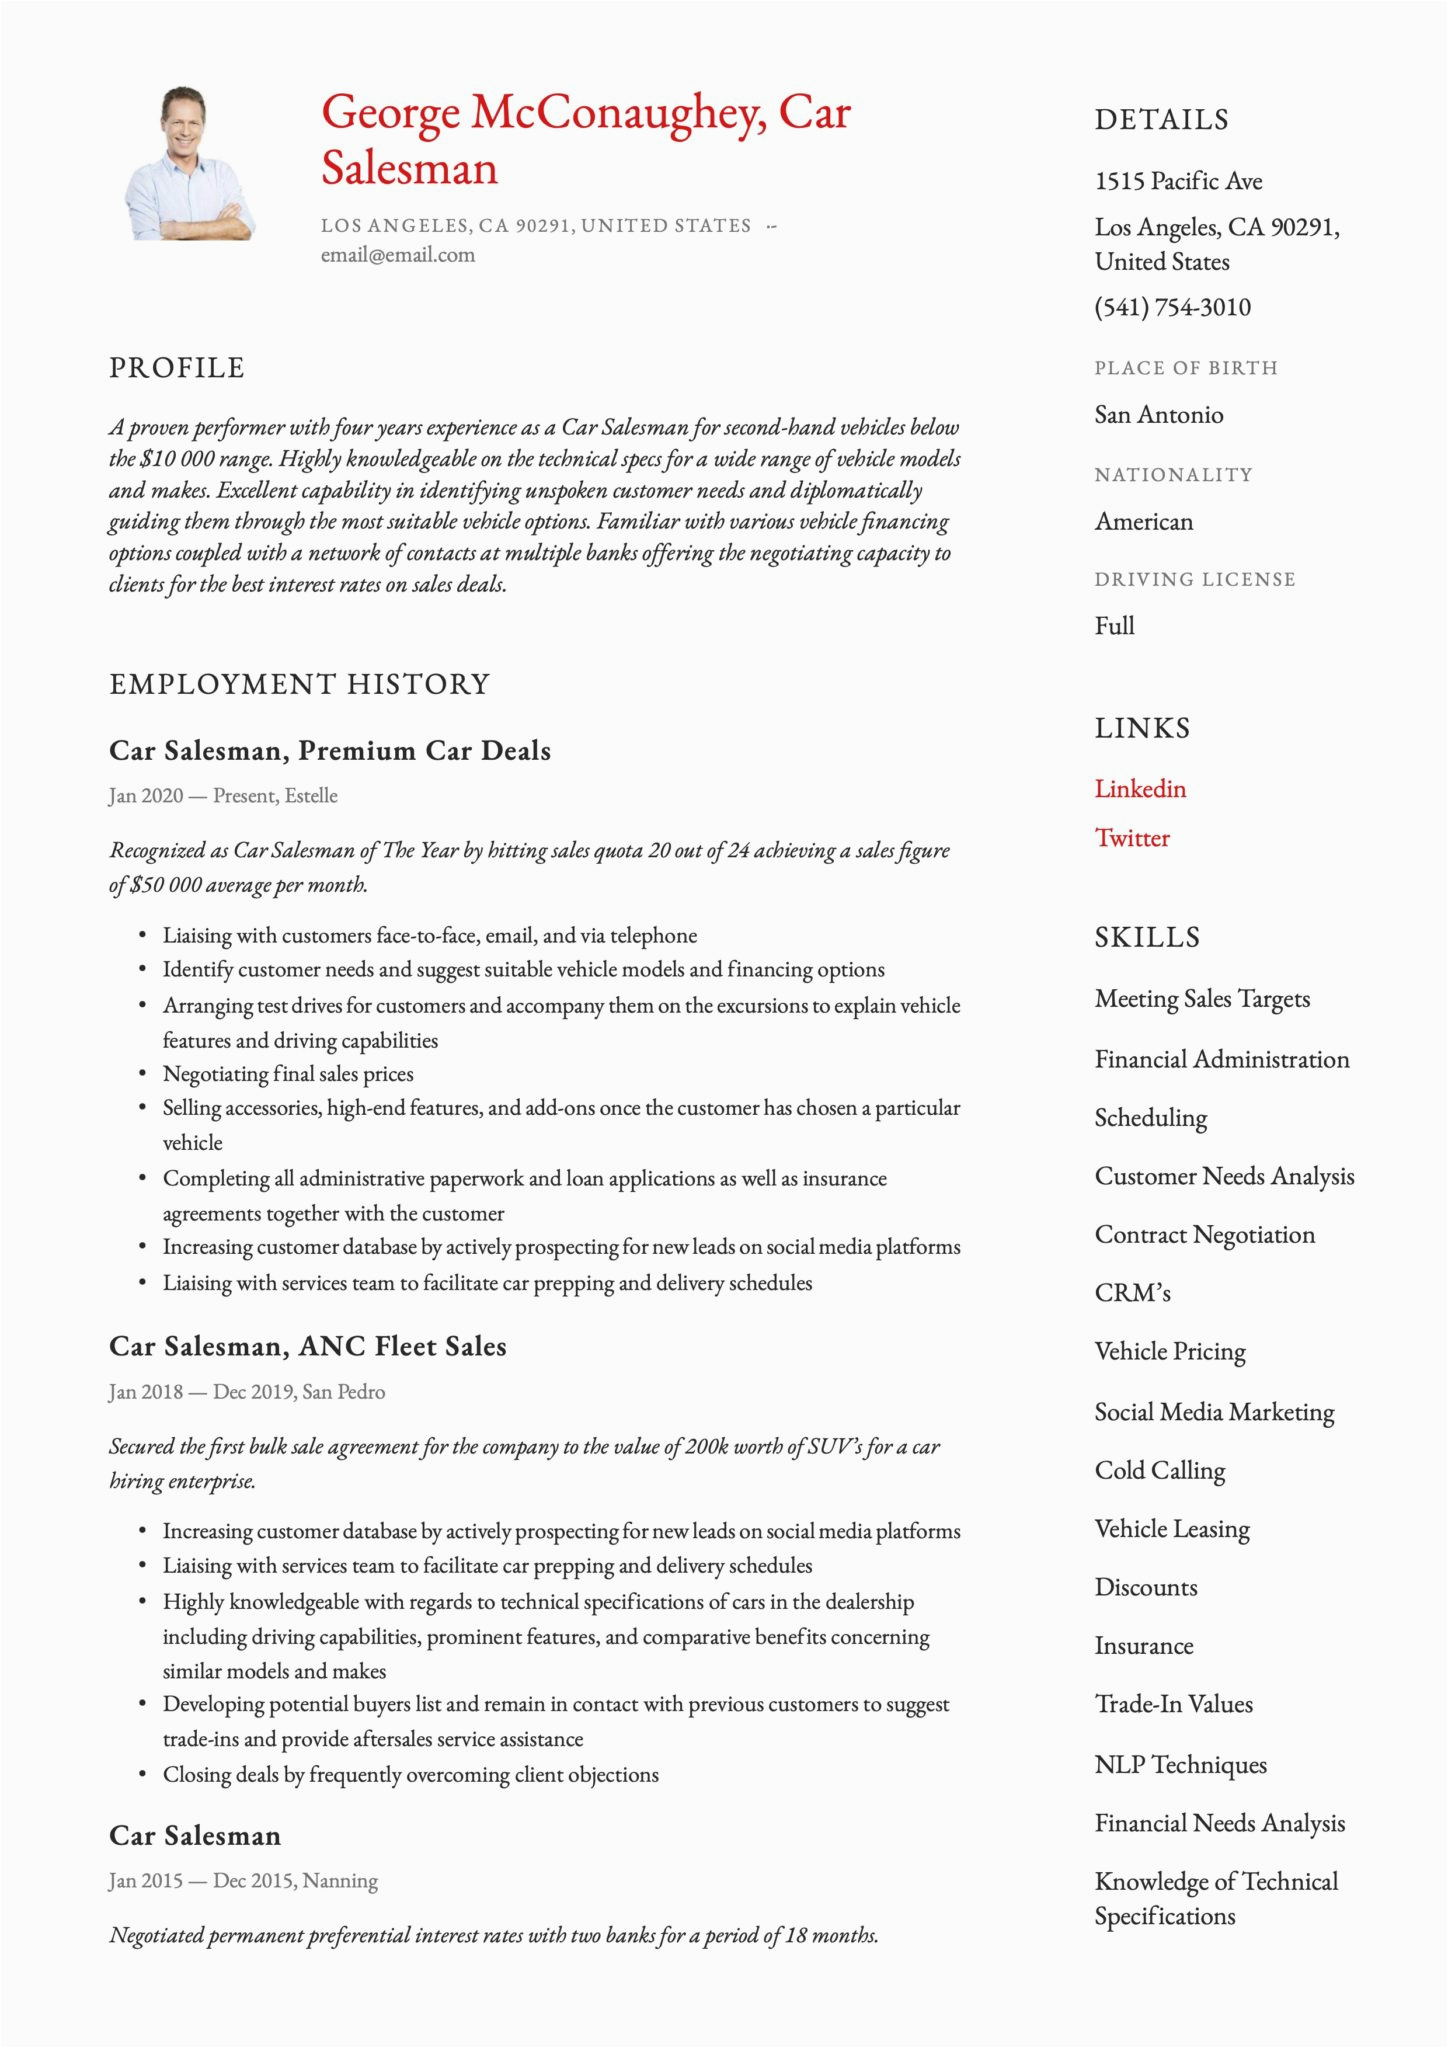 Car Salesman Job Description Resume Sample Car Salesman Resume & Writing Guide